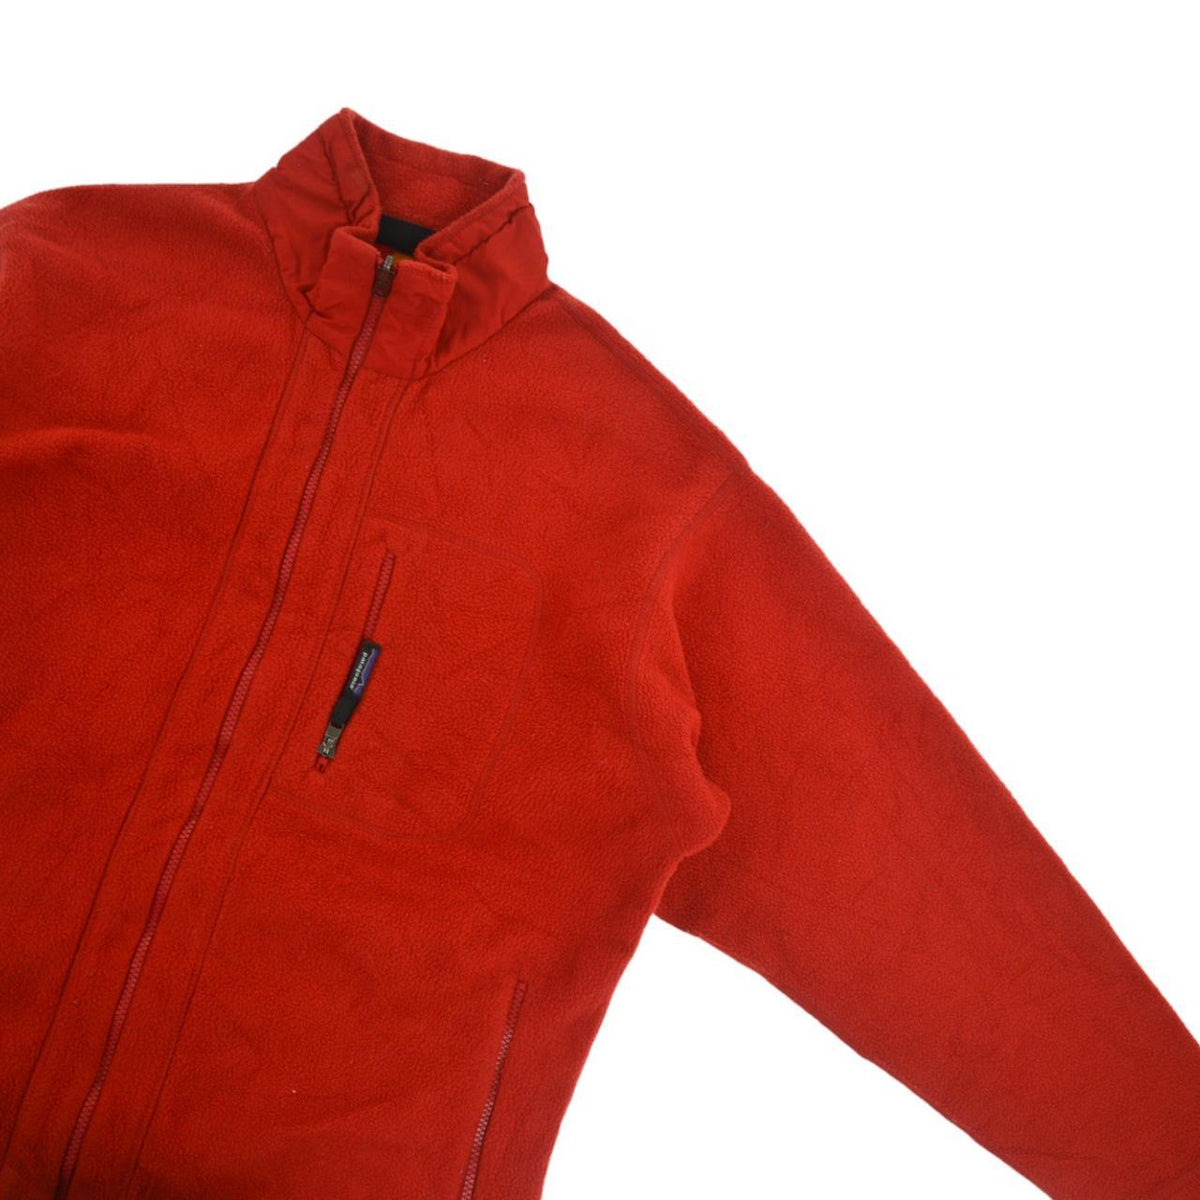 Vintage Patagonia Zip Up Fleece Jumper Size XL